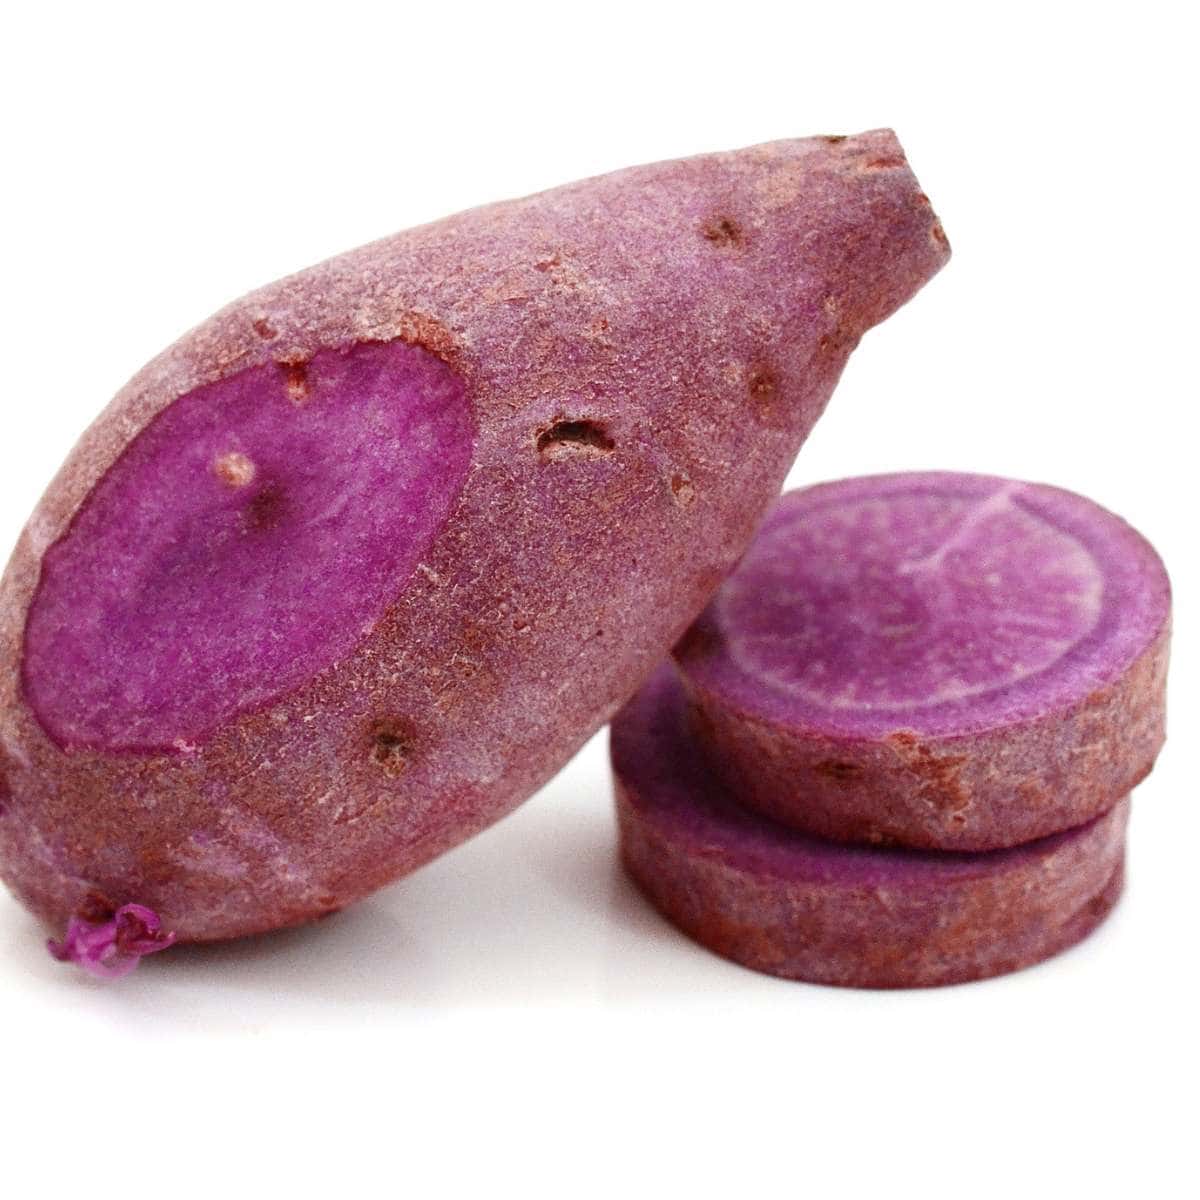 A purple sweet potato on a white background.